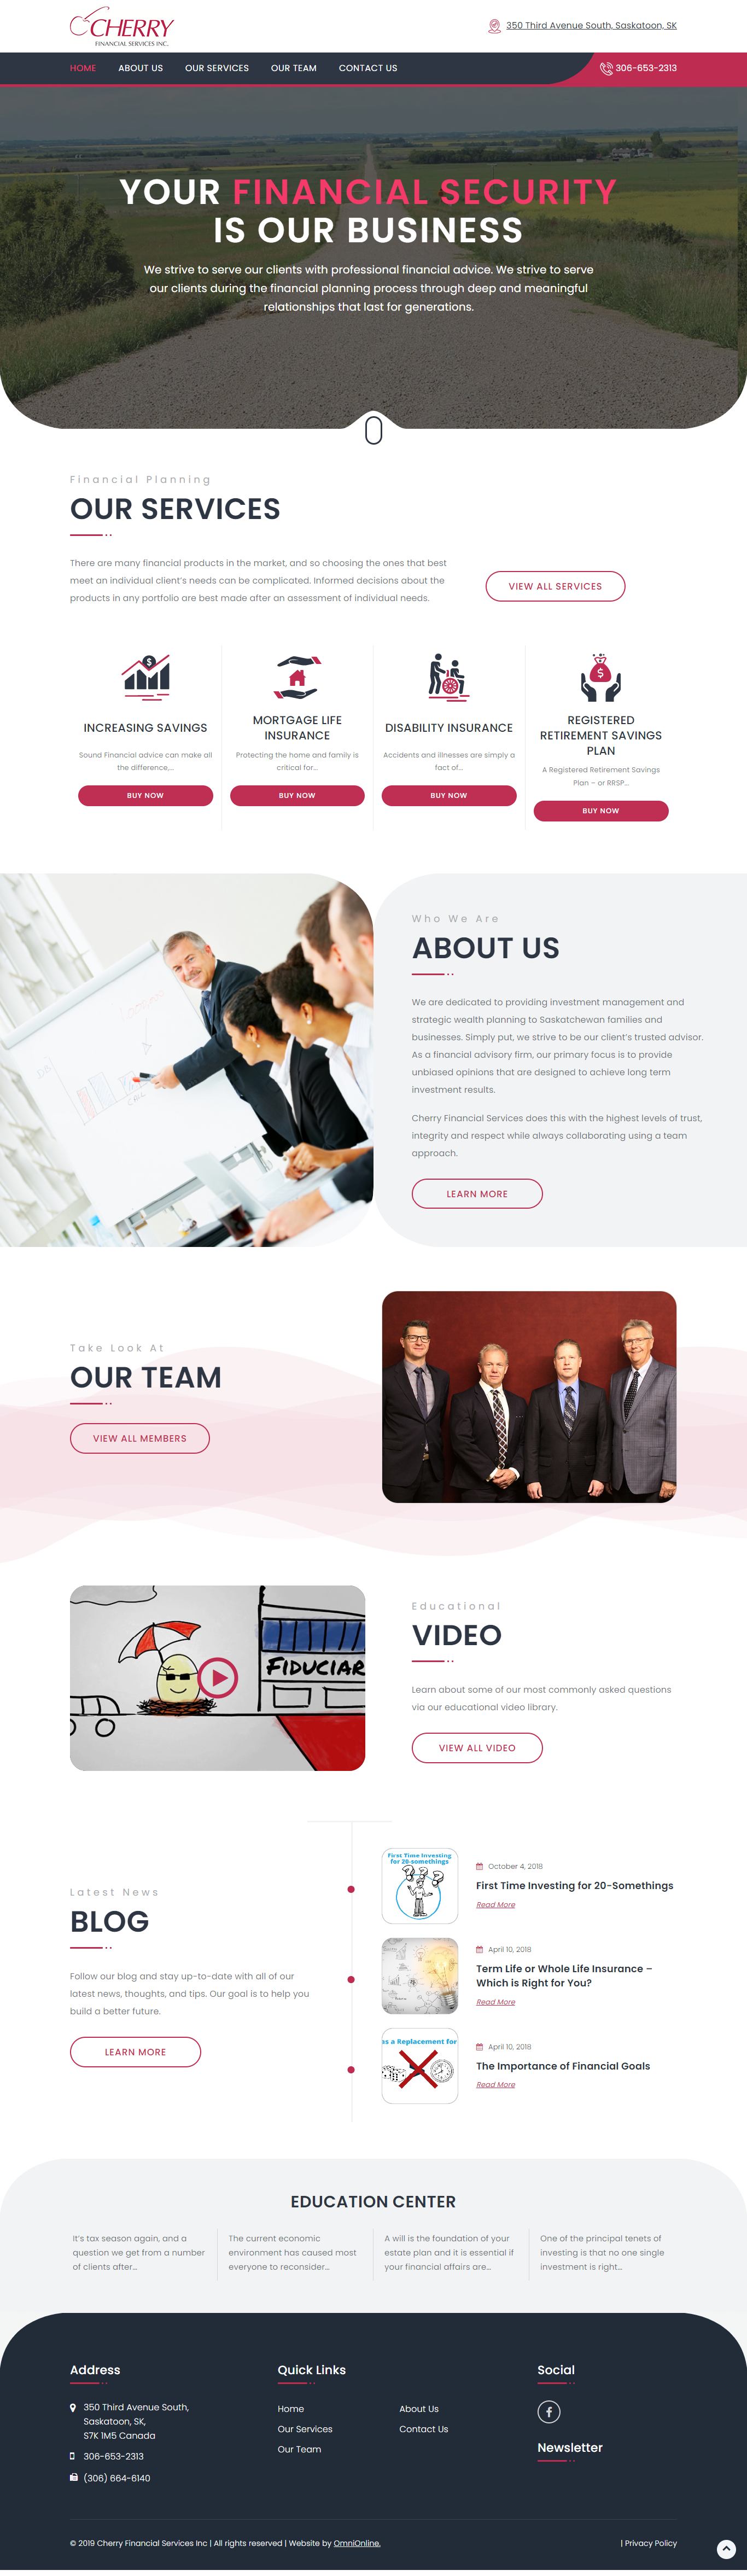 CHERRY FINANCIAL website - business web design in saskatchewan